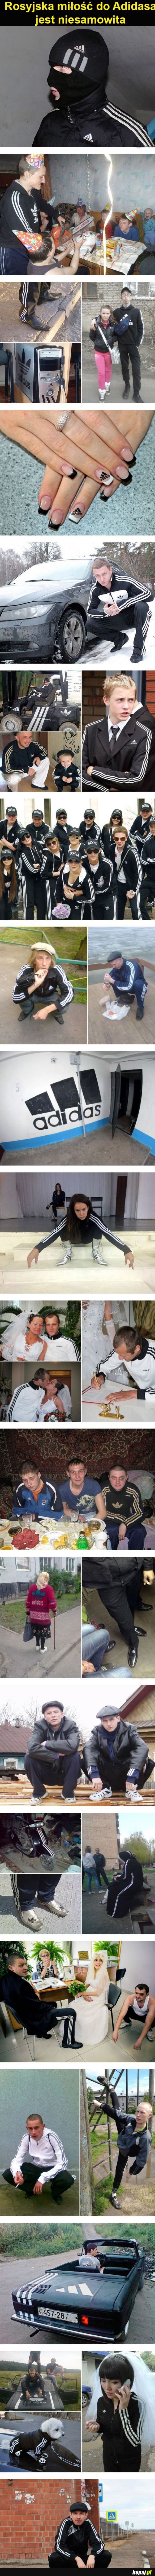 Ruskich miłość do Adidasa